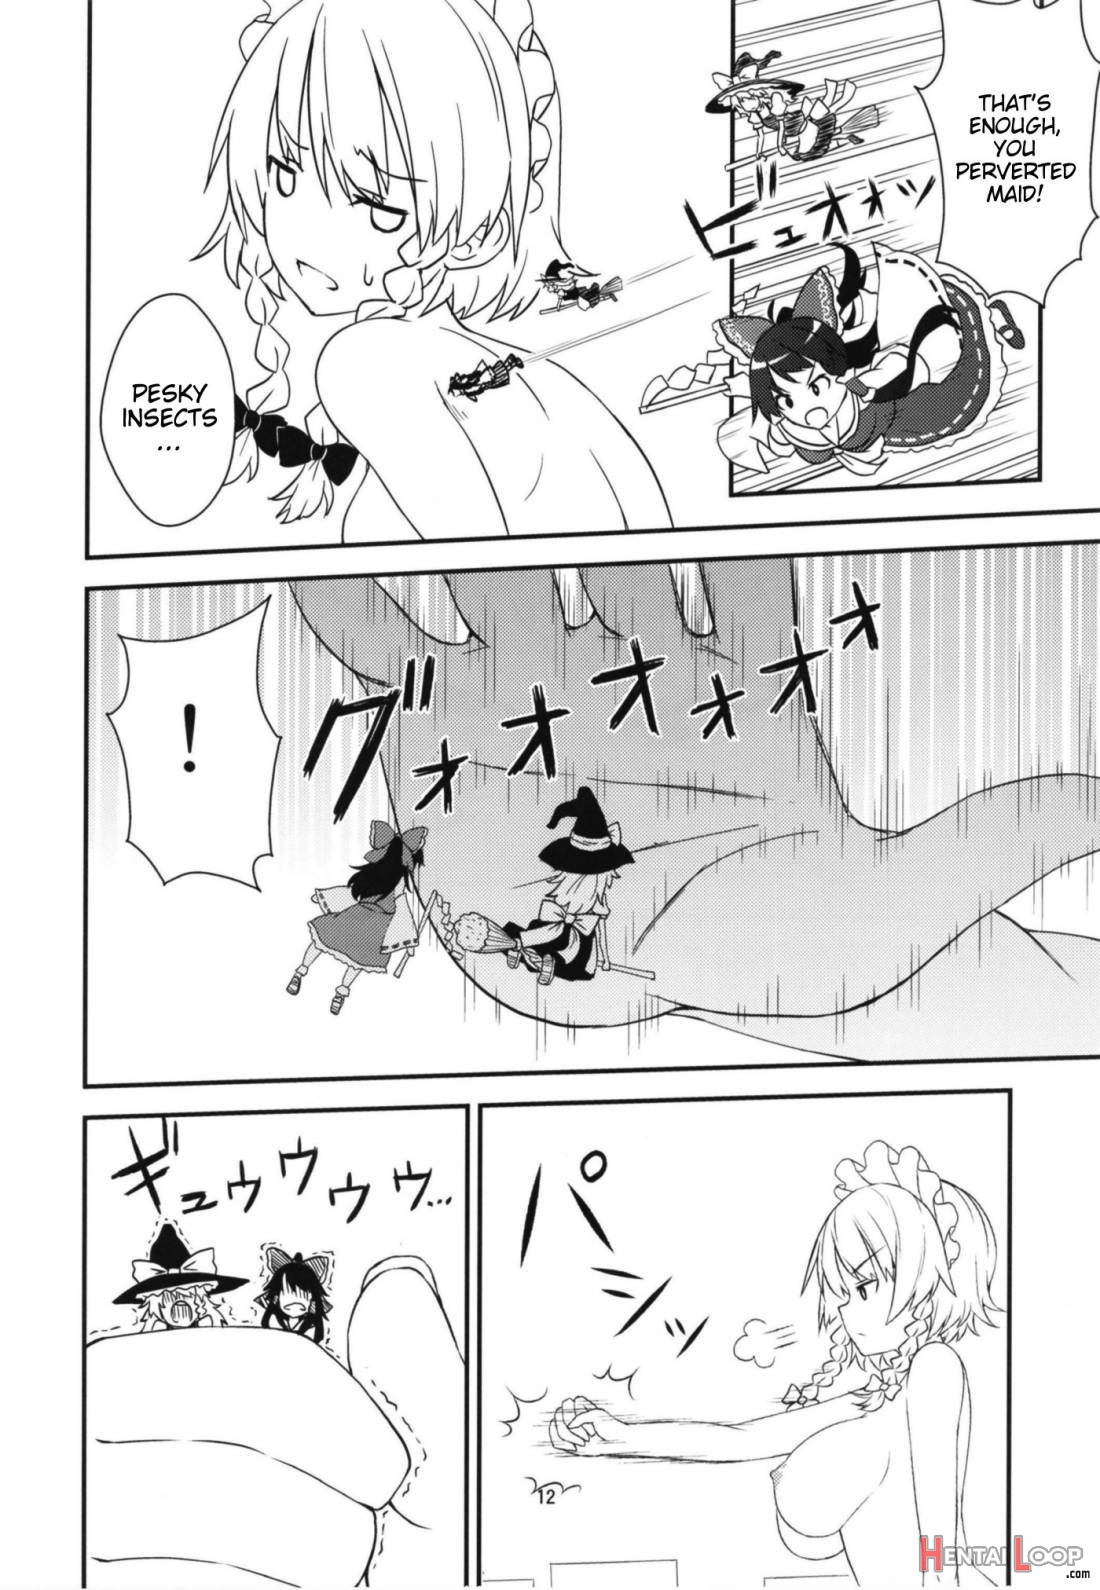 Mega Sakuya vs Giant Koakuma page 11